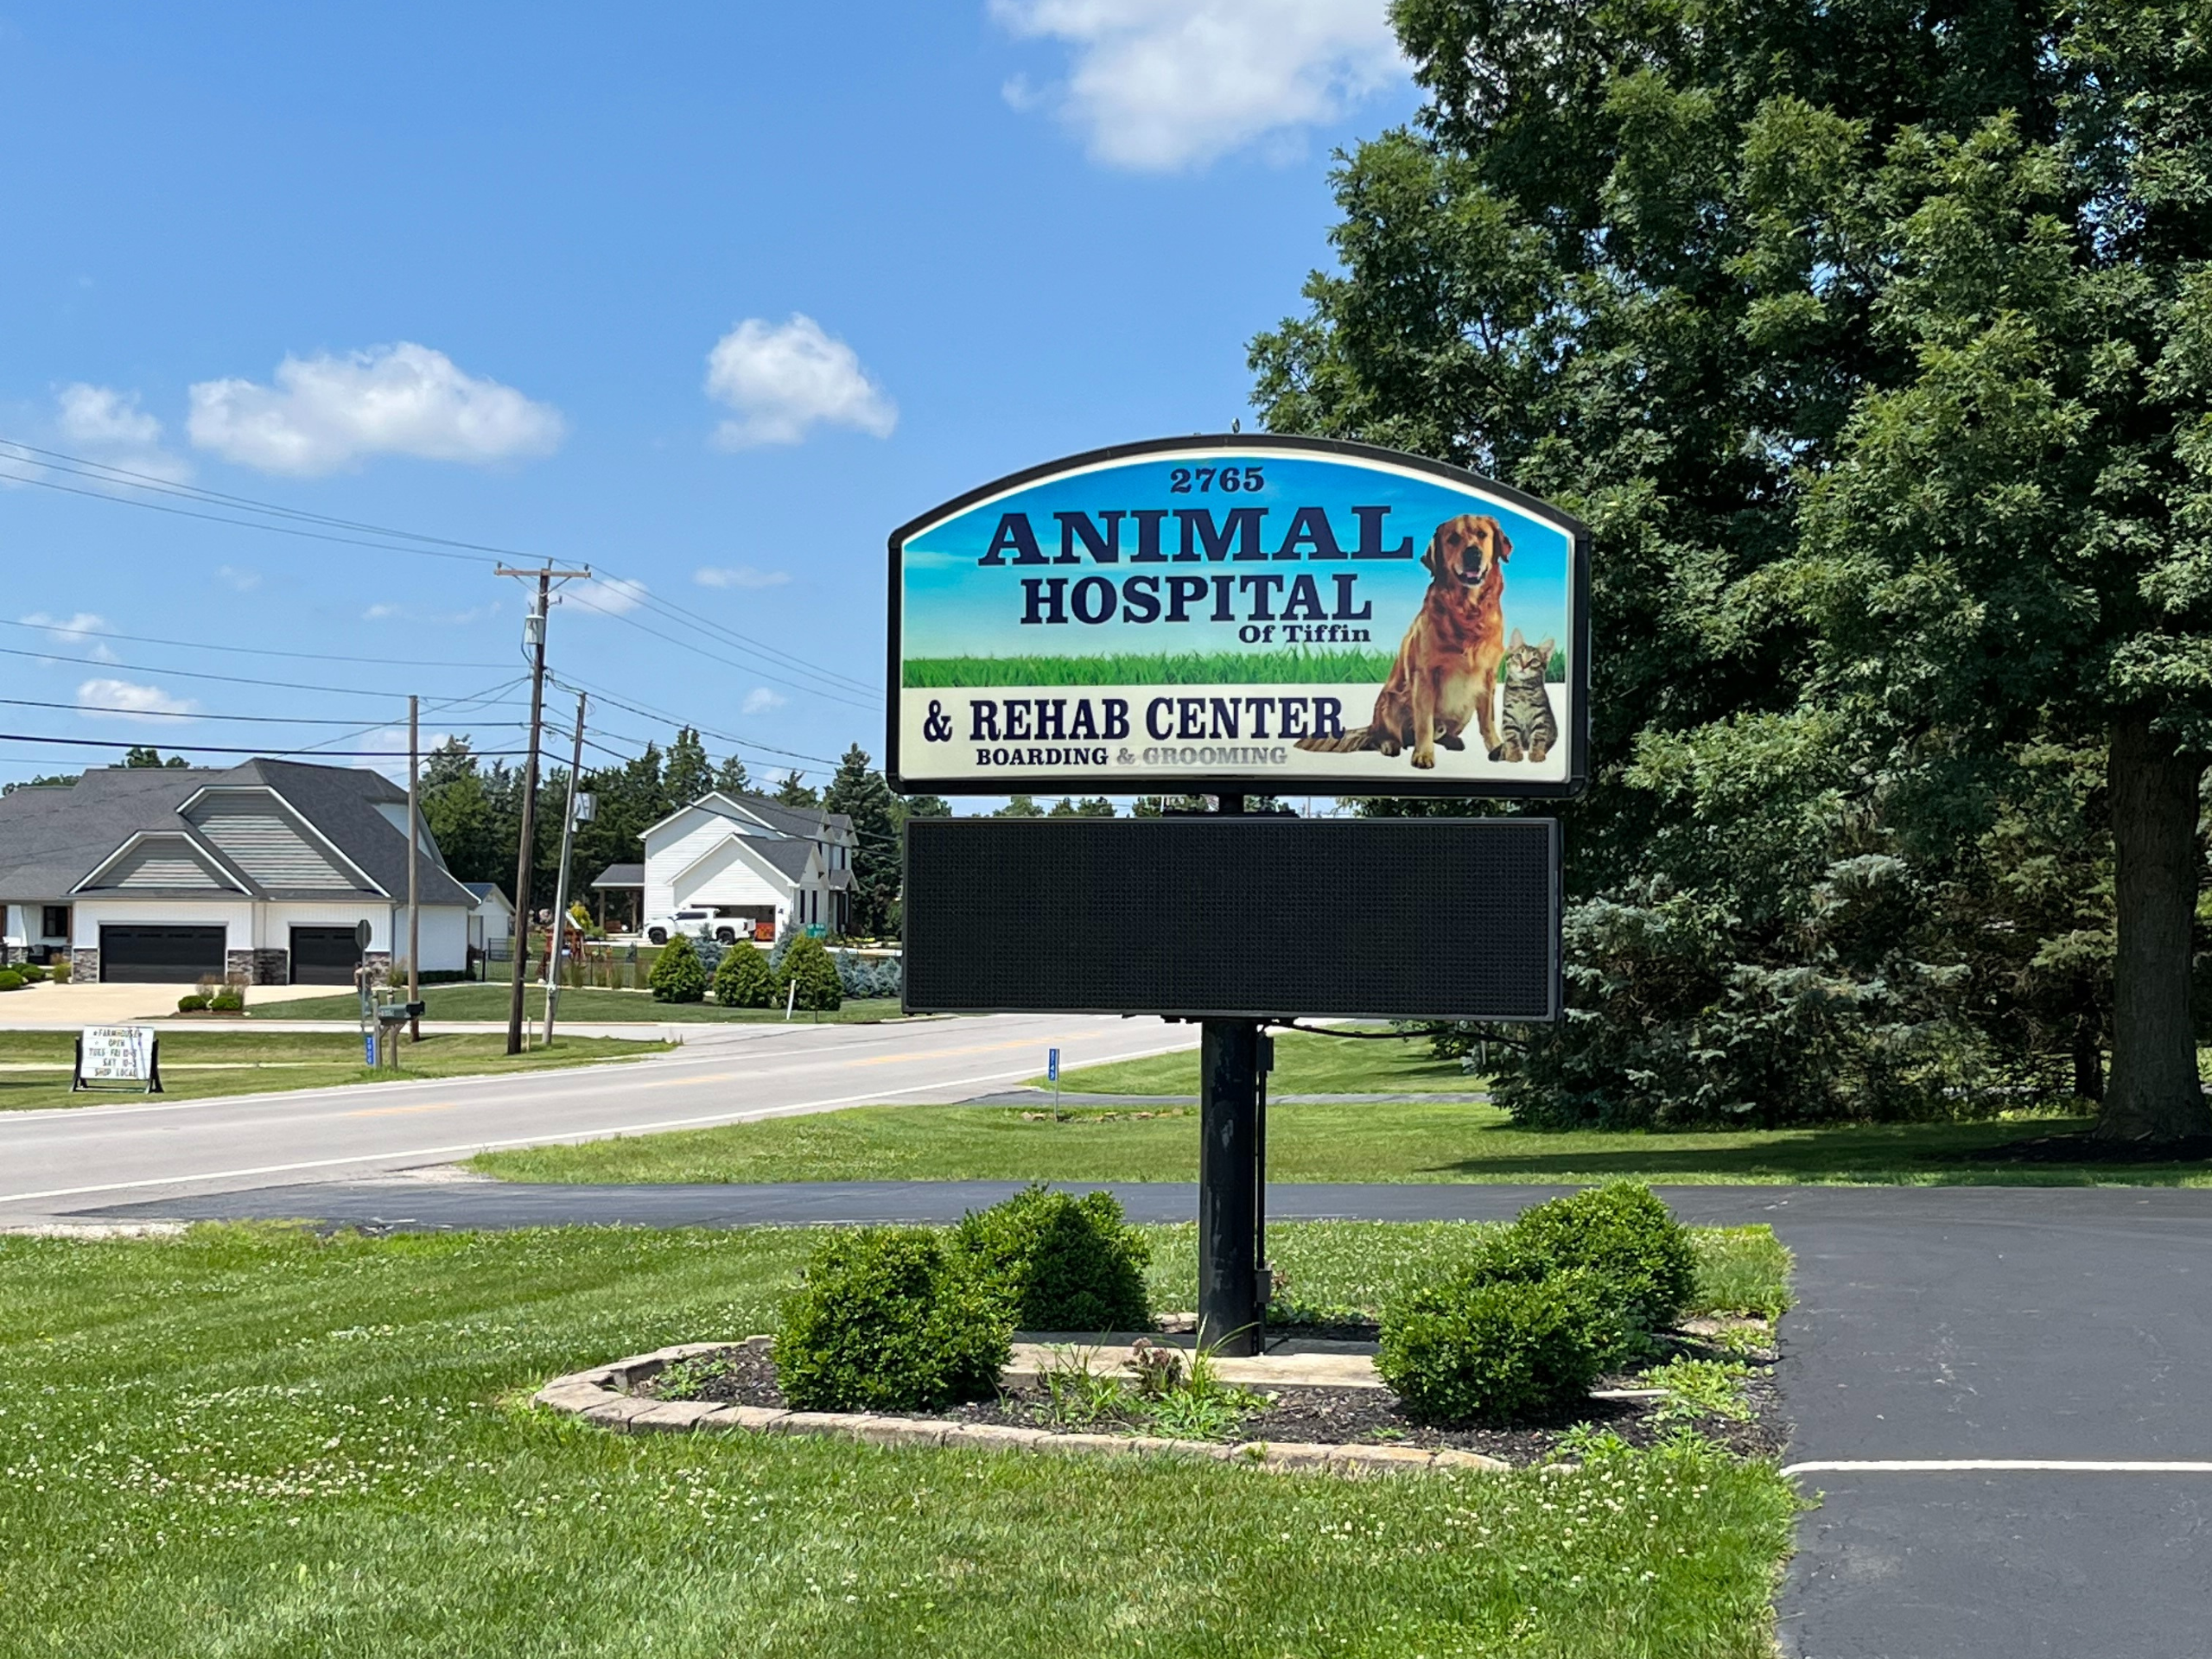 Animal Hospital of Tiffin sign board